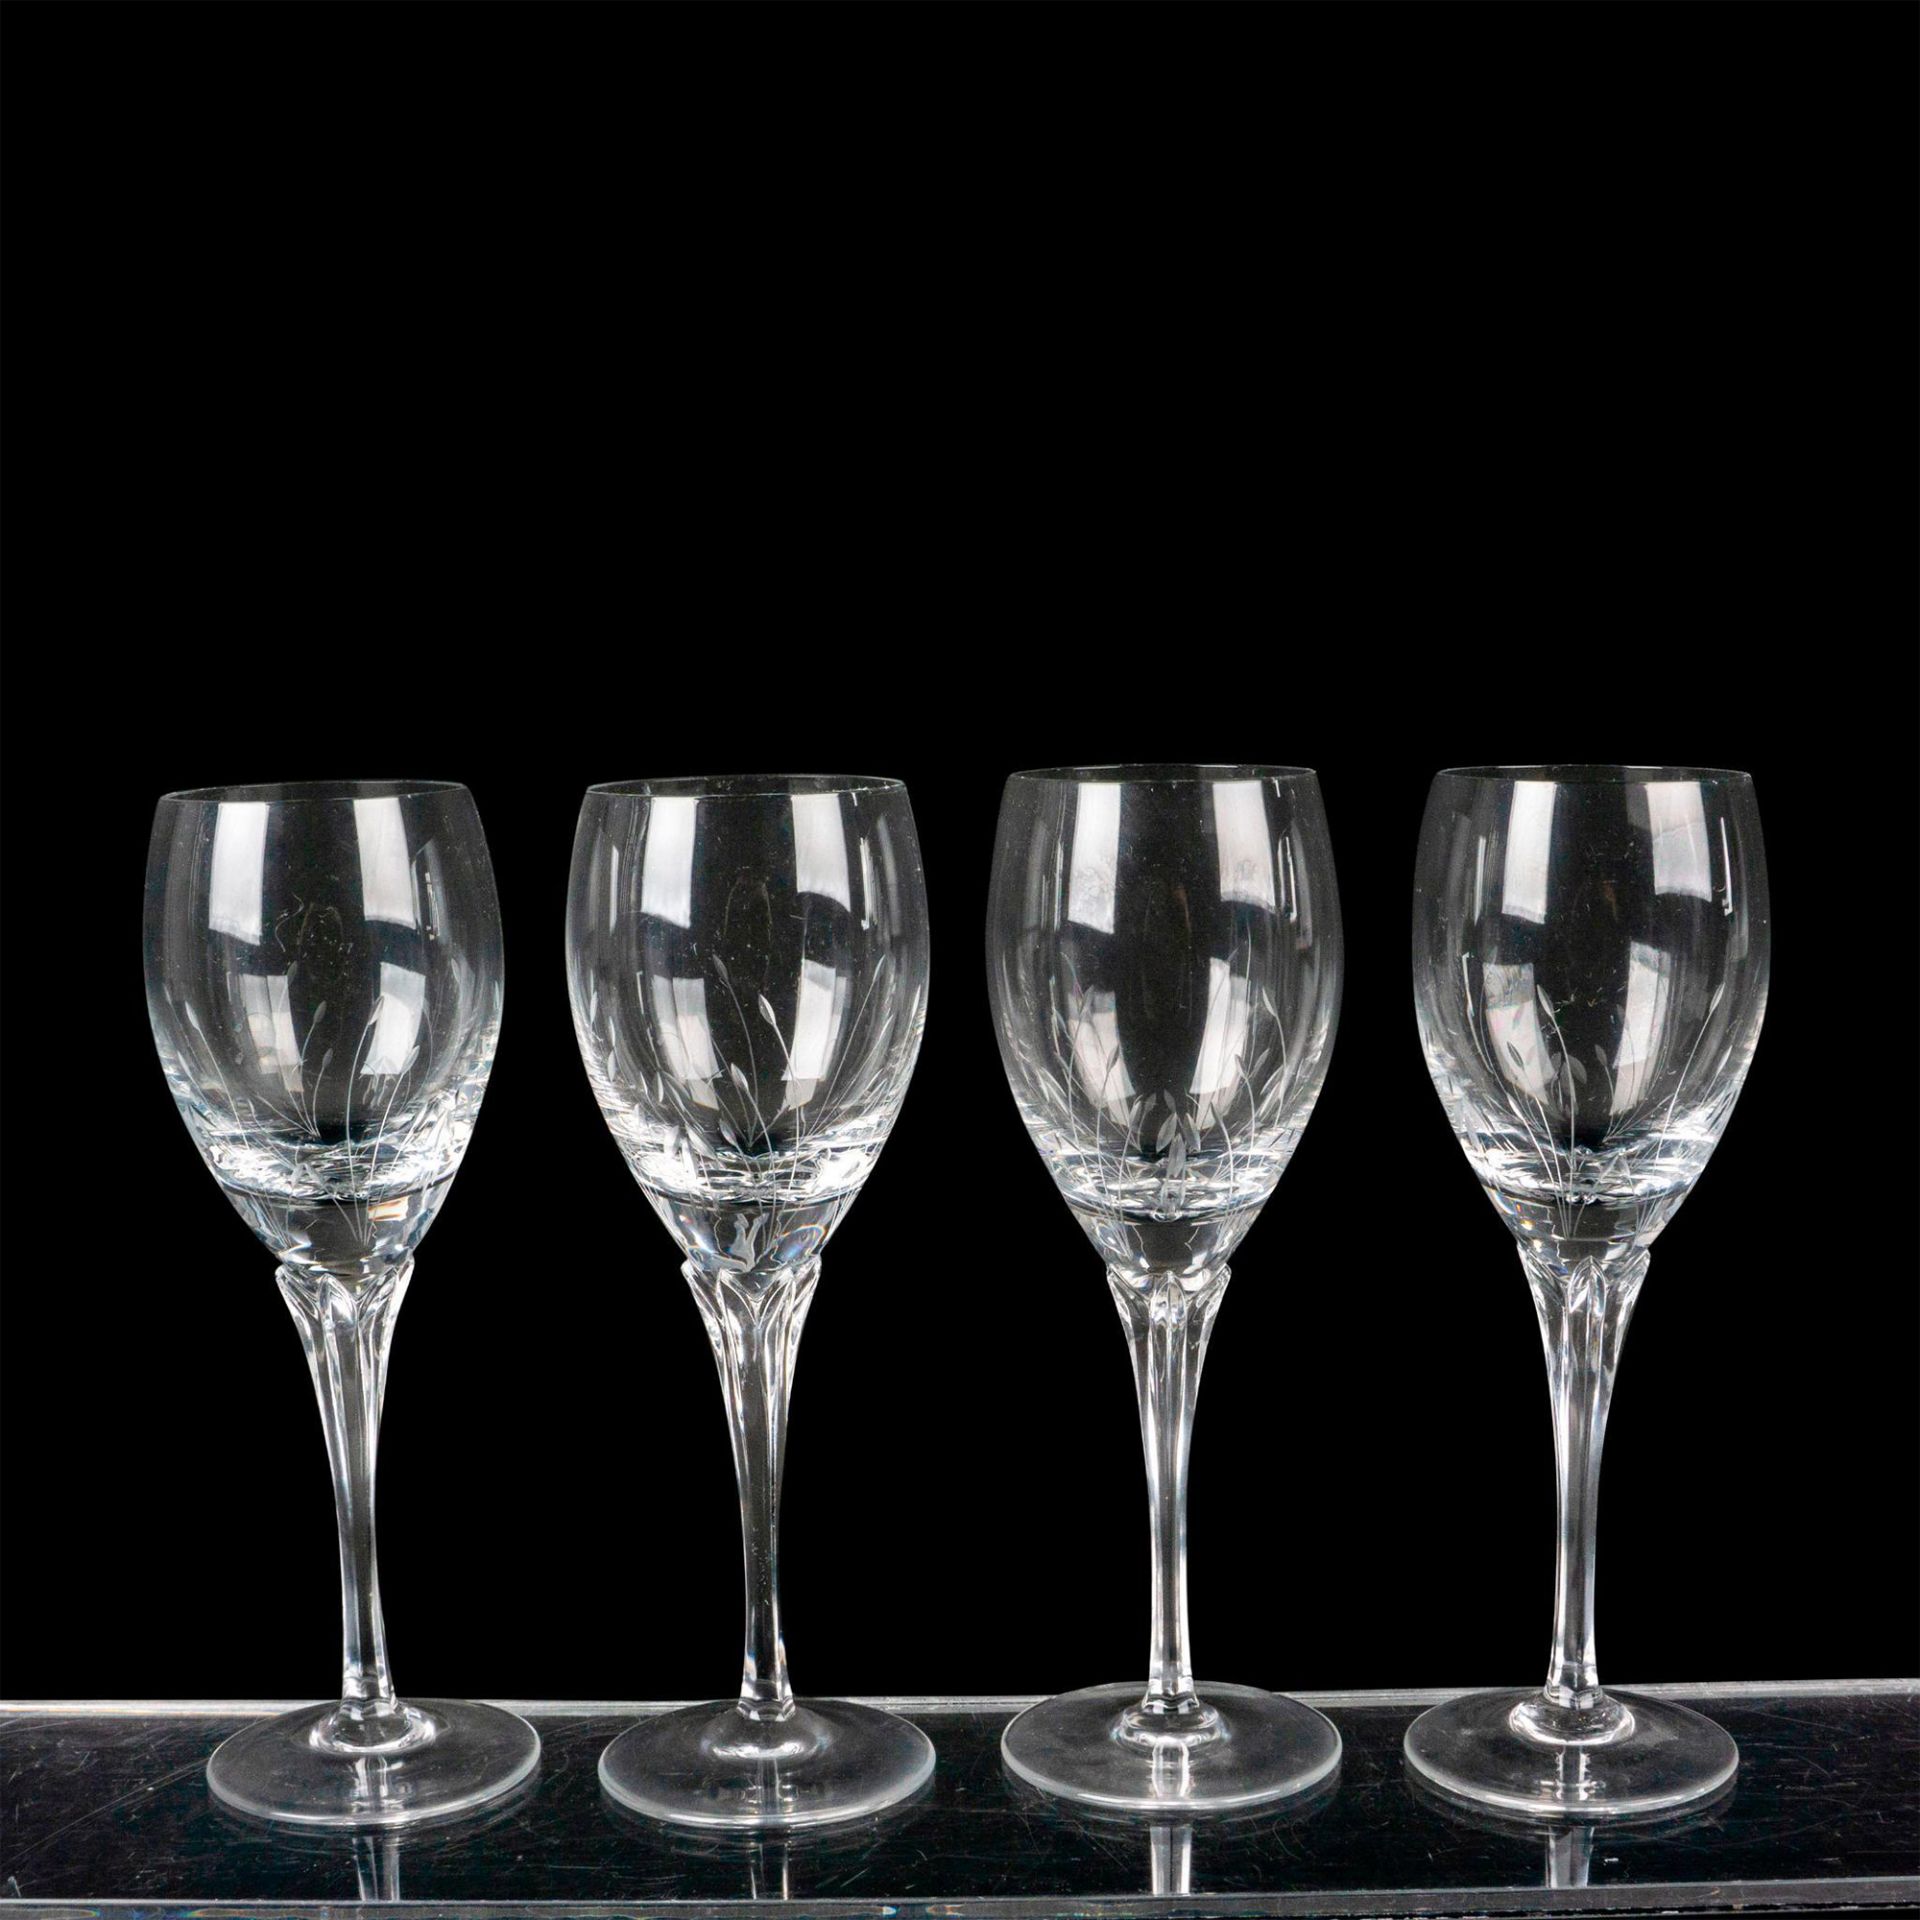 4pc Gorham Crystal Sherry/Dessert Wine Glasses, Jolie - Image 2 of 3